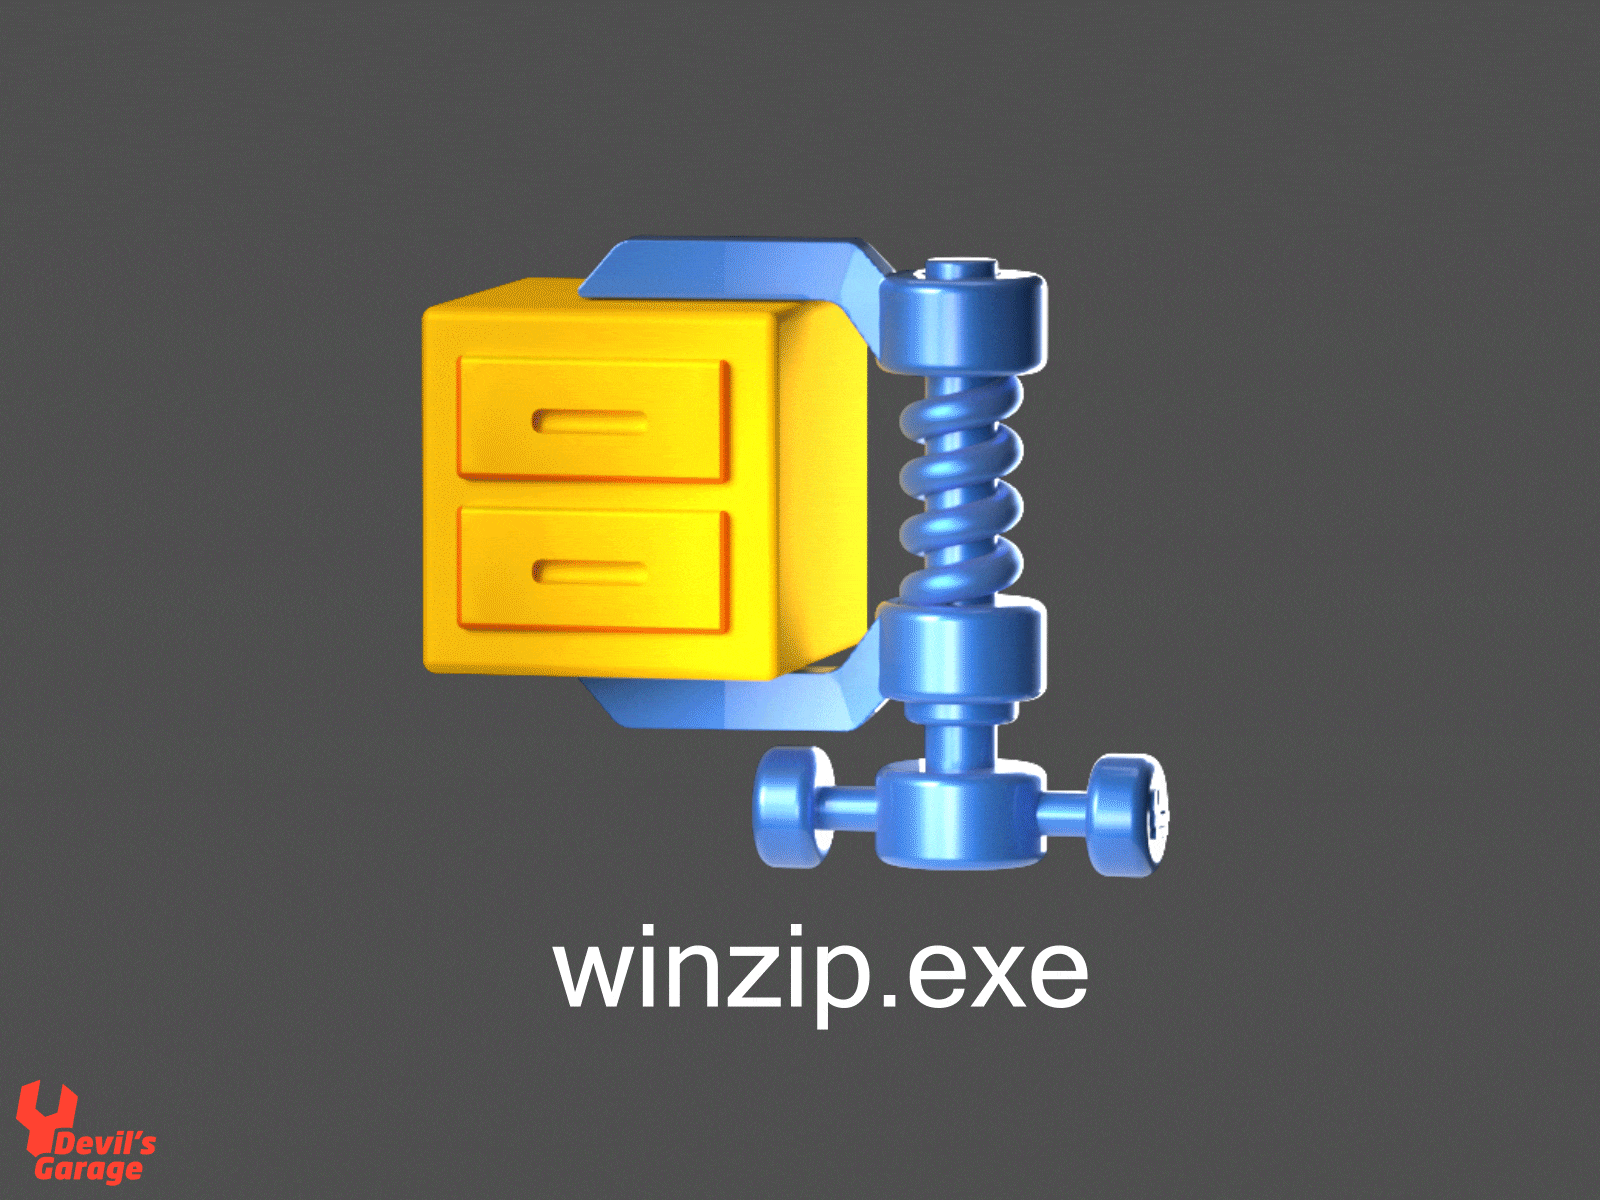 winzip.exe